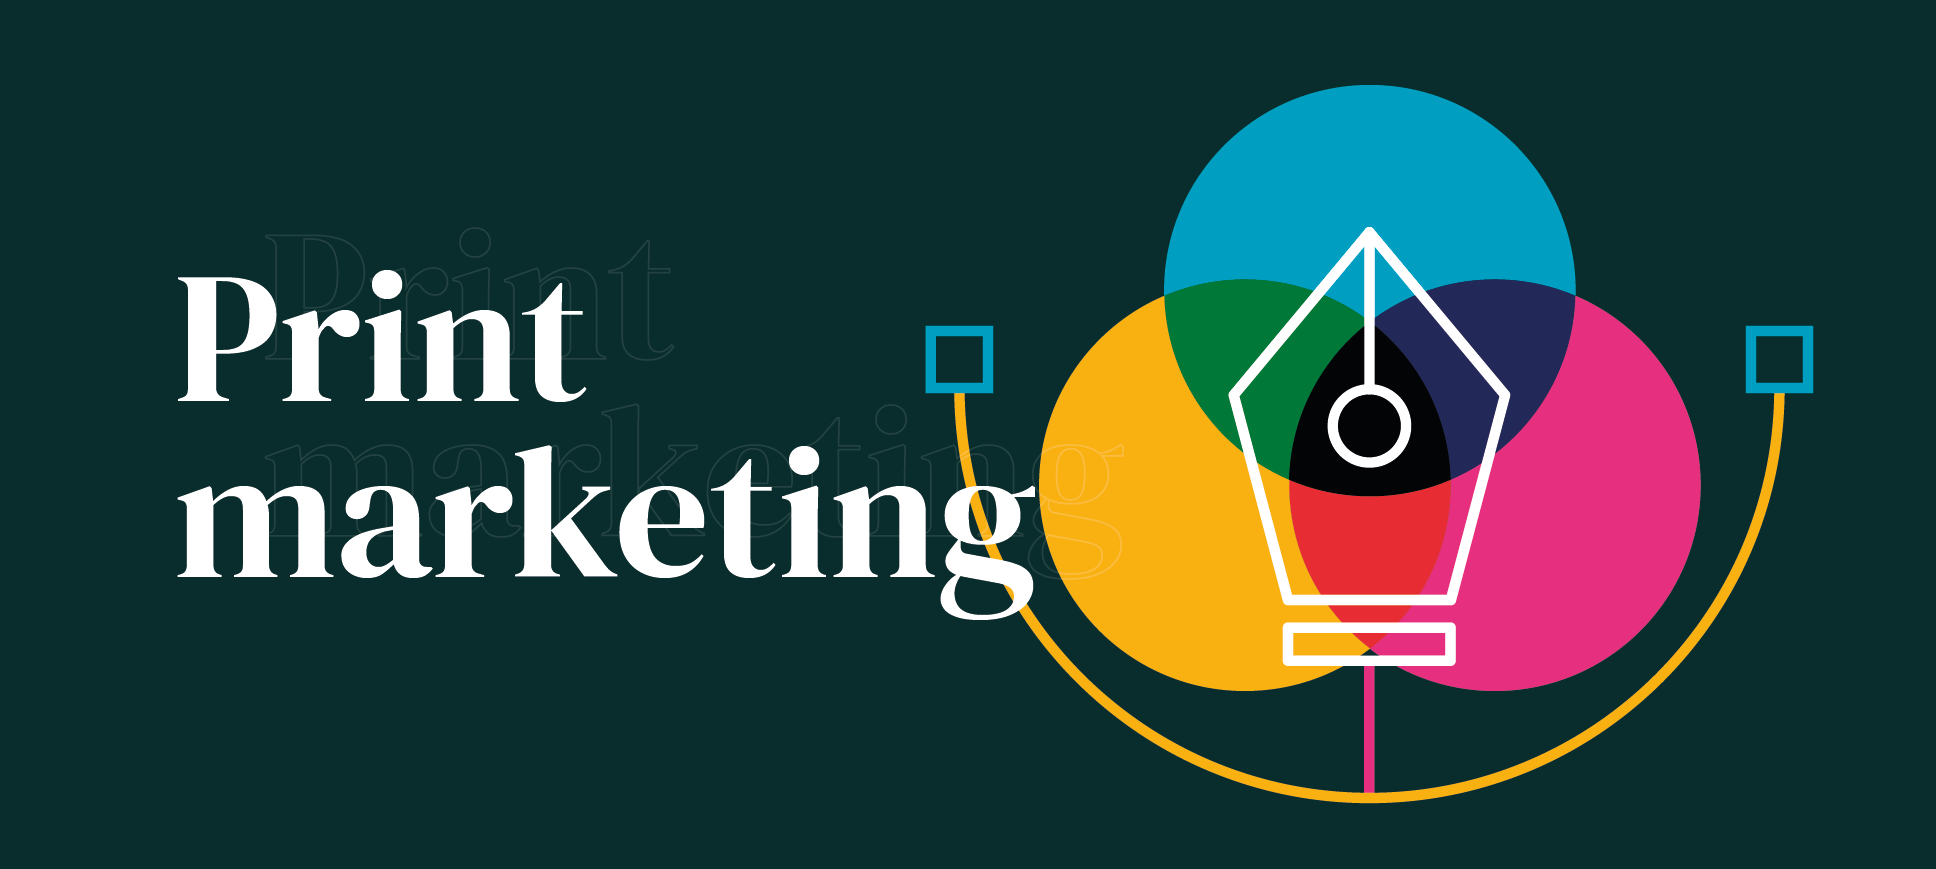 Print marketing blog banner